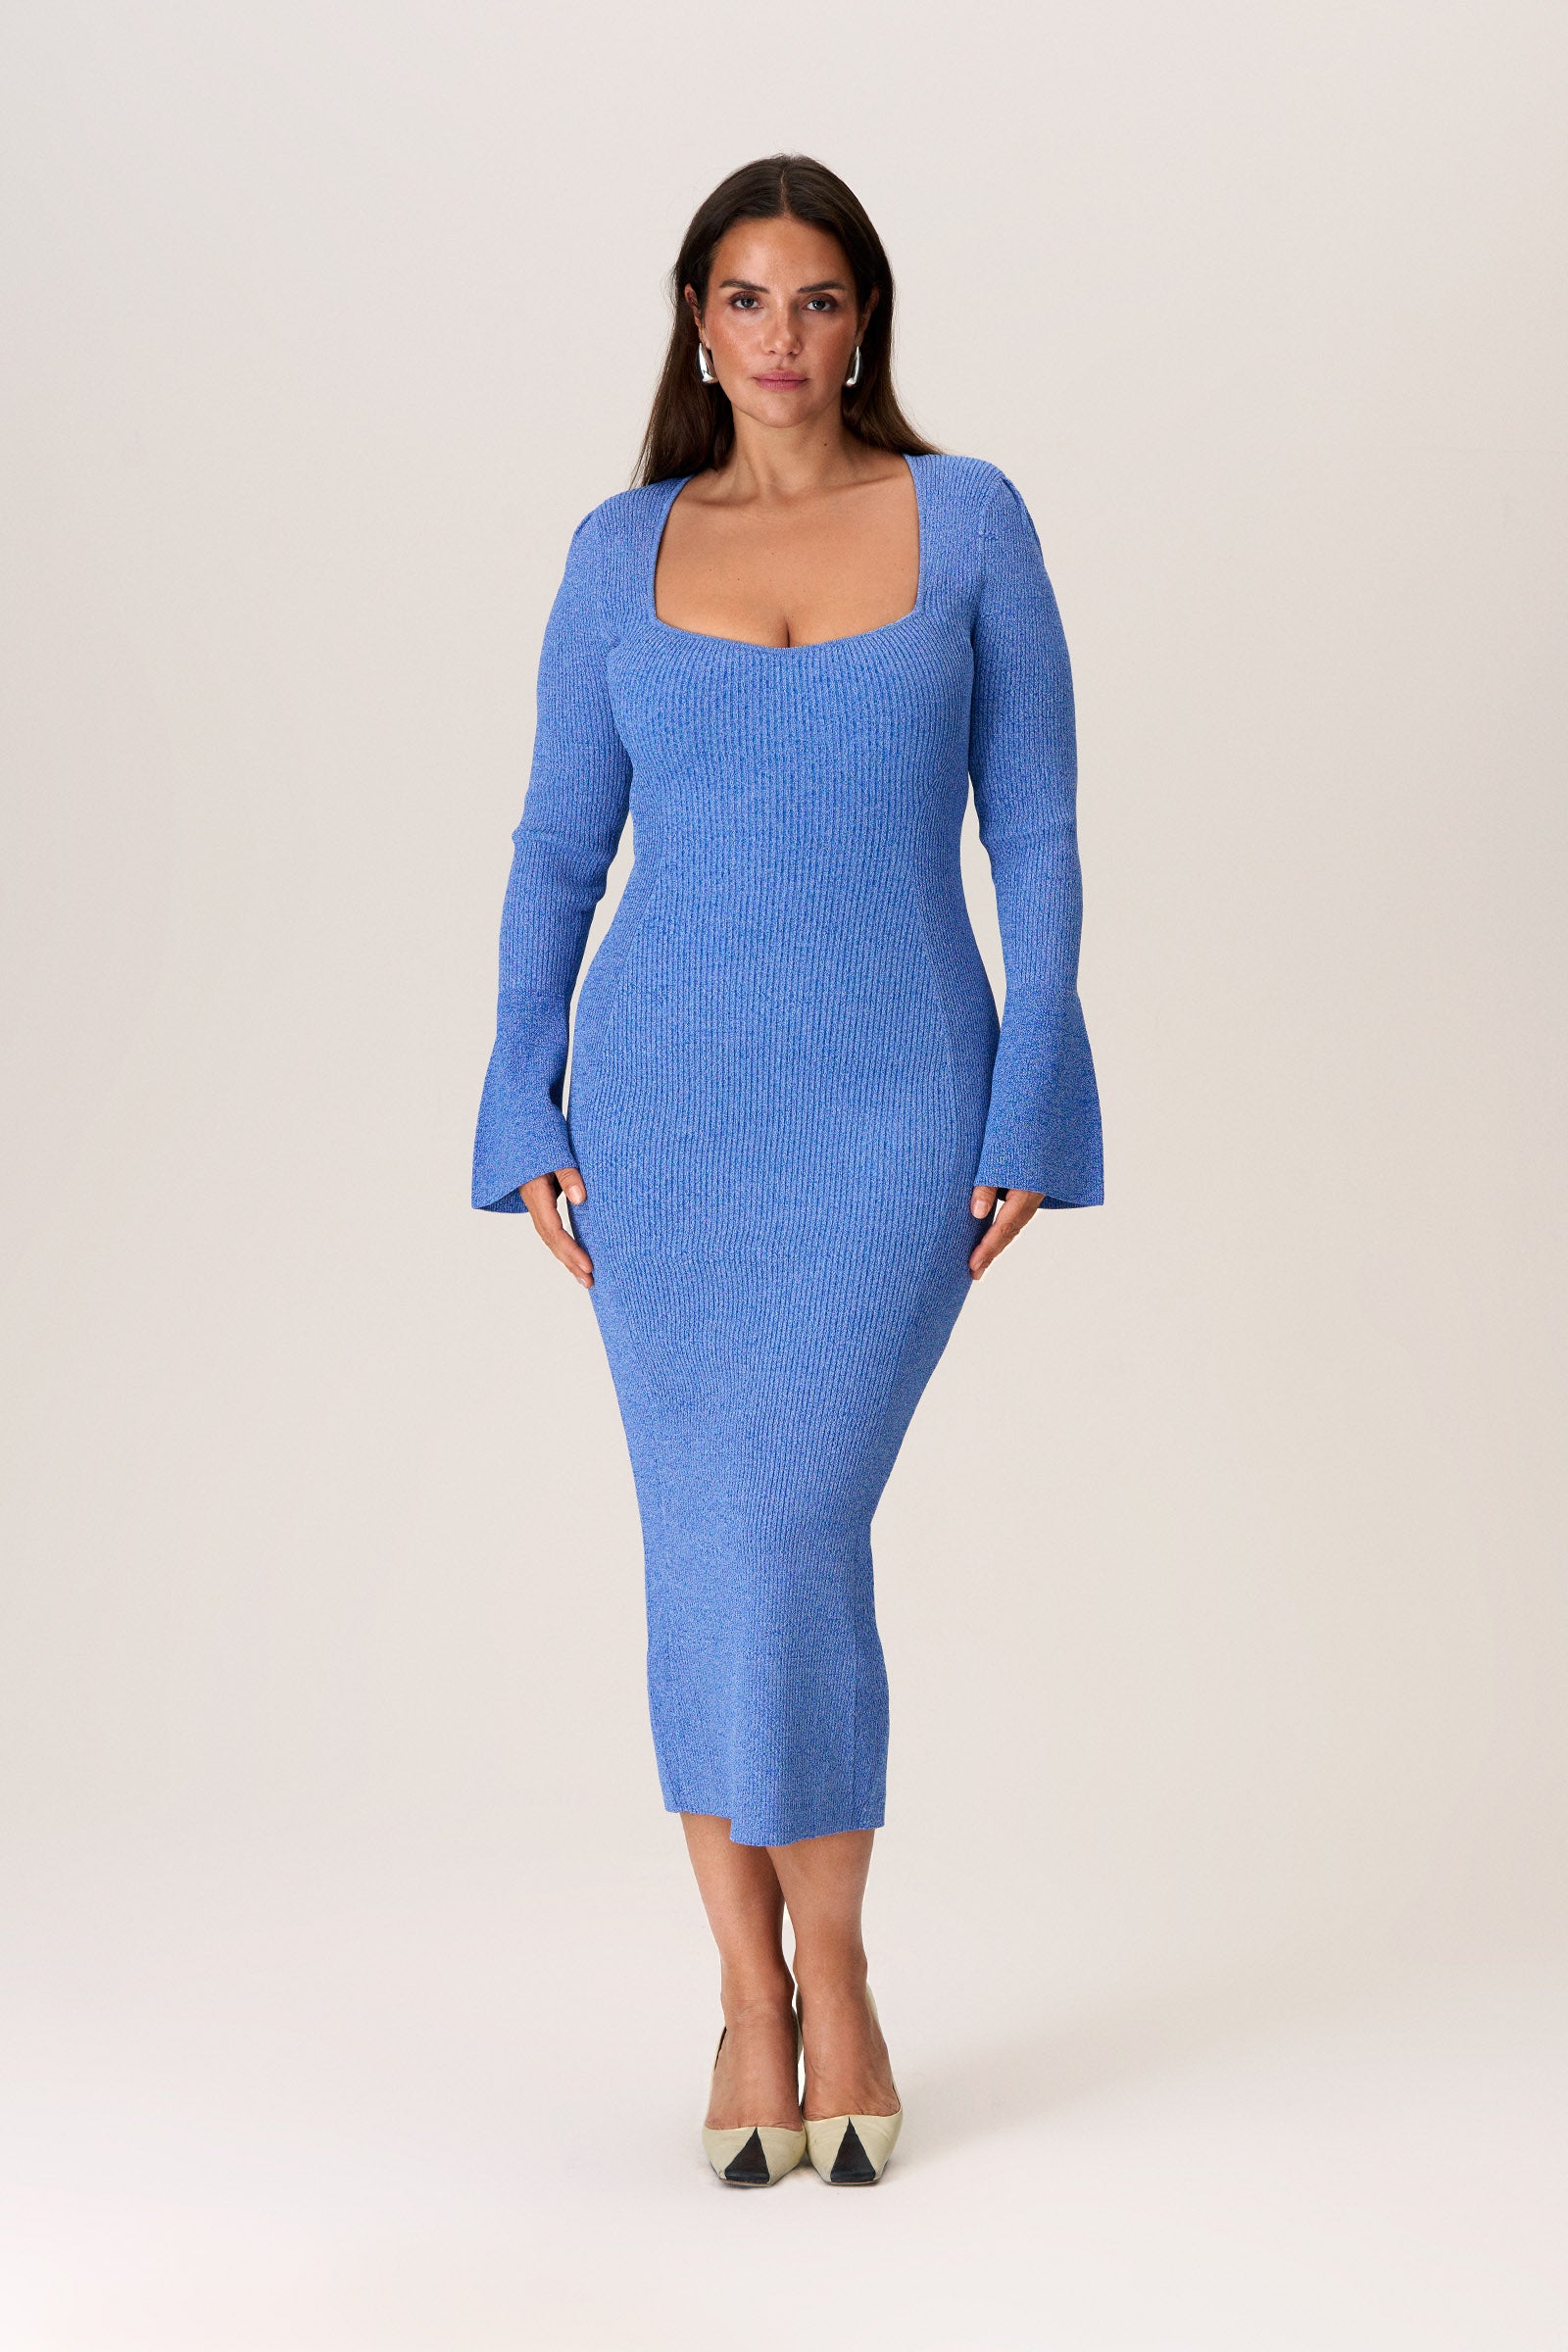 Ribbed midi dress in blue – Shop midi dress